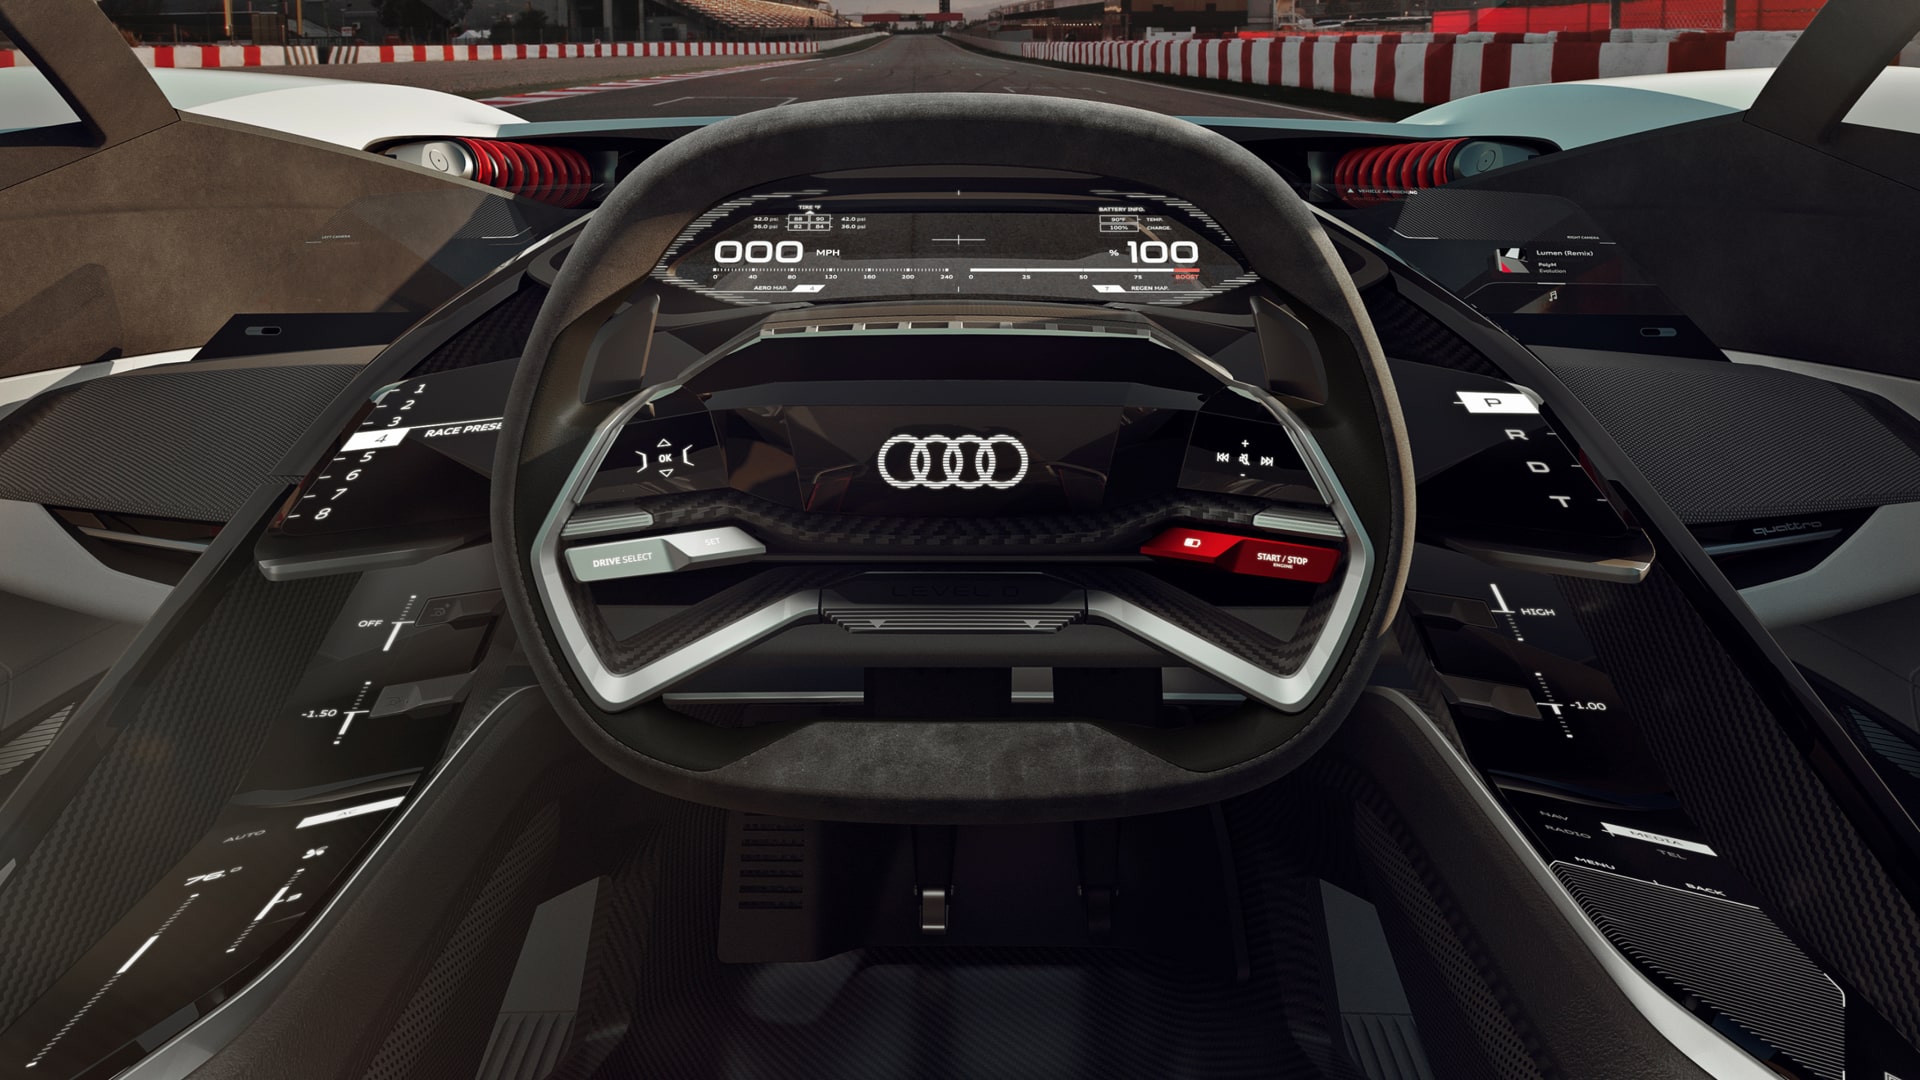 Audi PB18 drivers cockpit and surrounding interface design